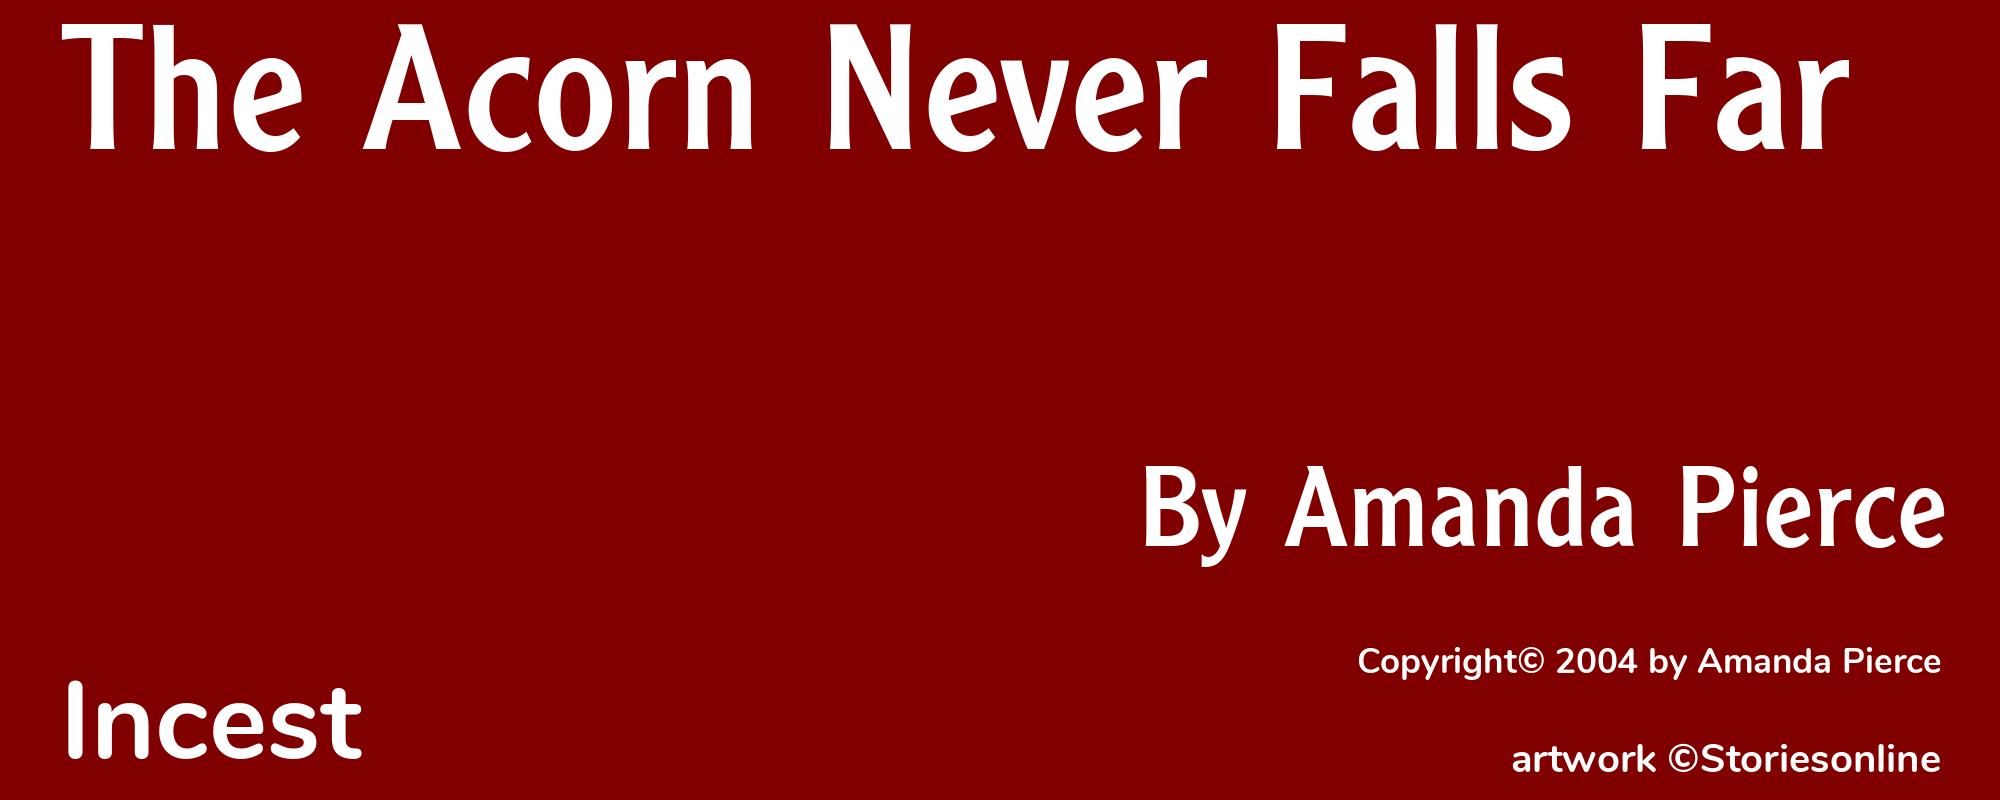 The Acorn Never Falls Far - Cover